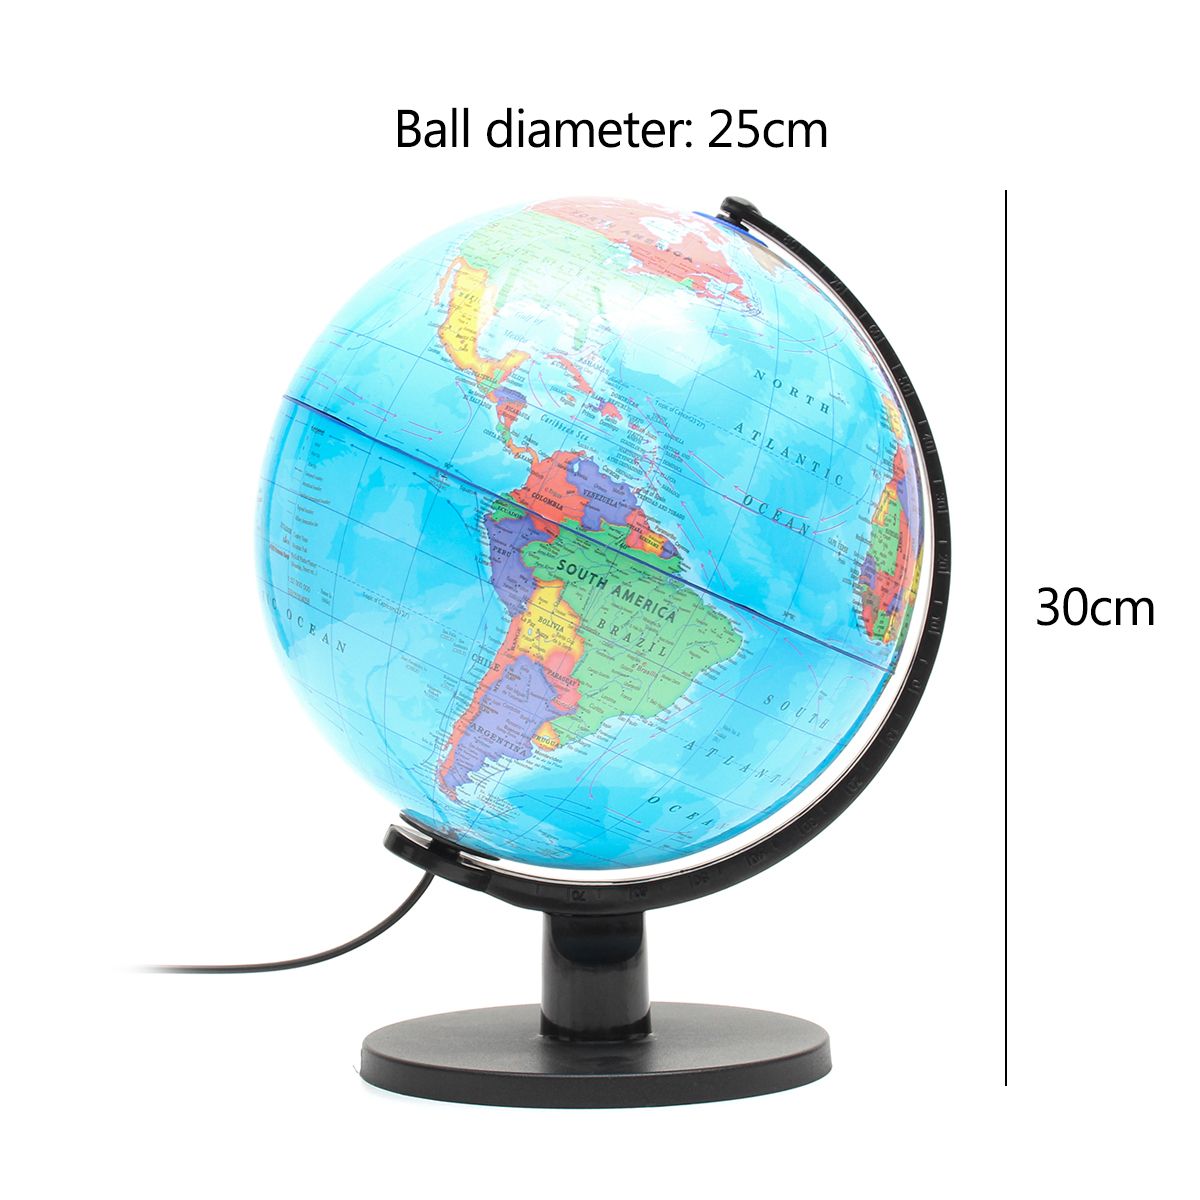 25cm-110V-World-Globe-Night-Light-Geography-LED-Lamp-Kids-Bedroom-Decor-Gift-US-Plug-1390550